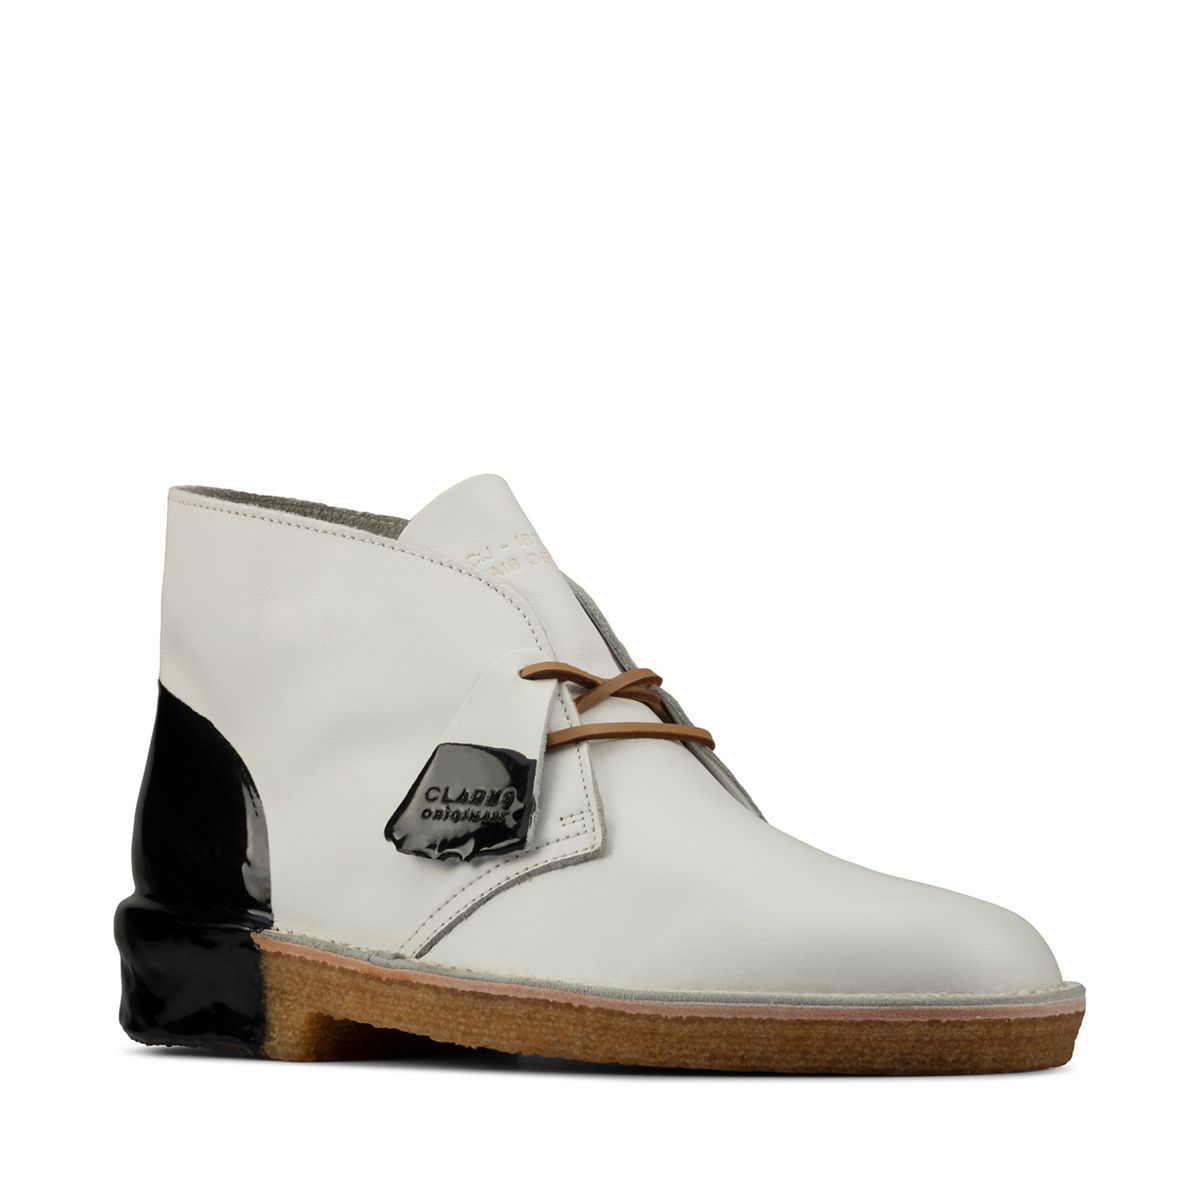 Bergbeklimmer Productie semester Clarks Mens Originals Desert Boot Limited Edition Made in ITALY | eBay